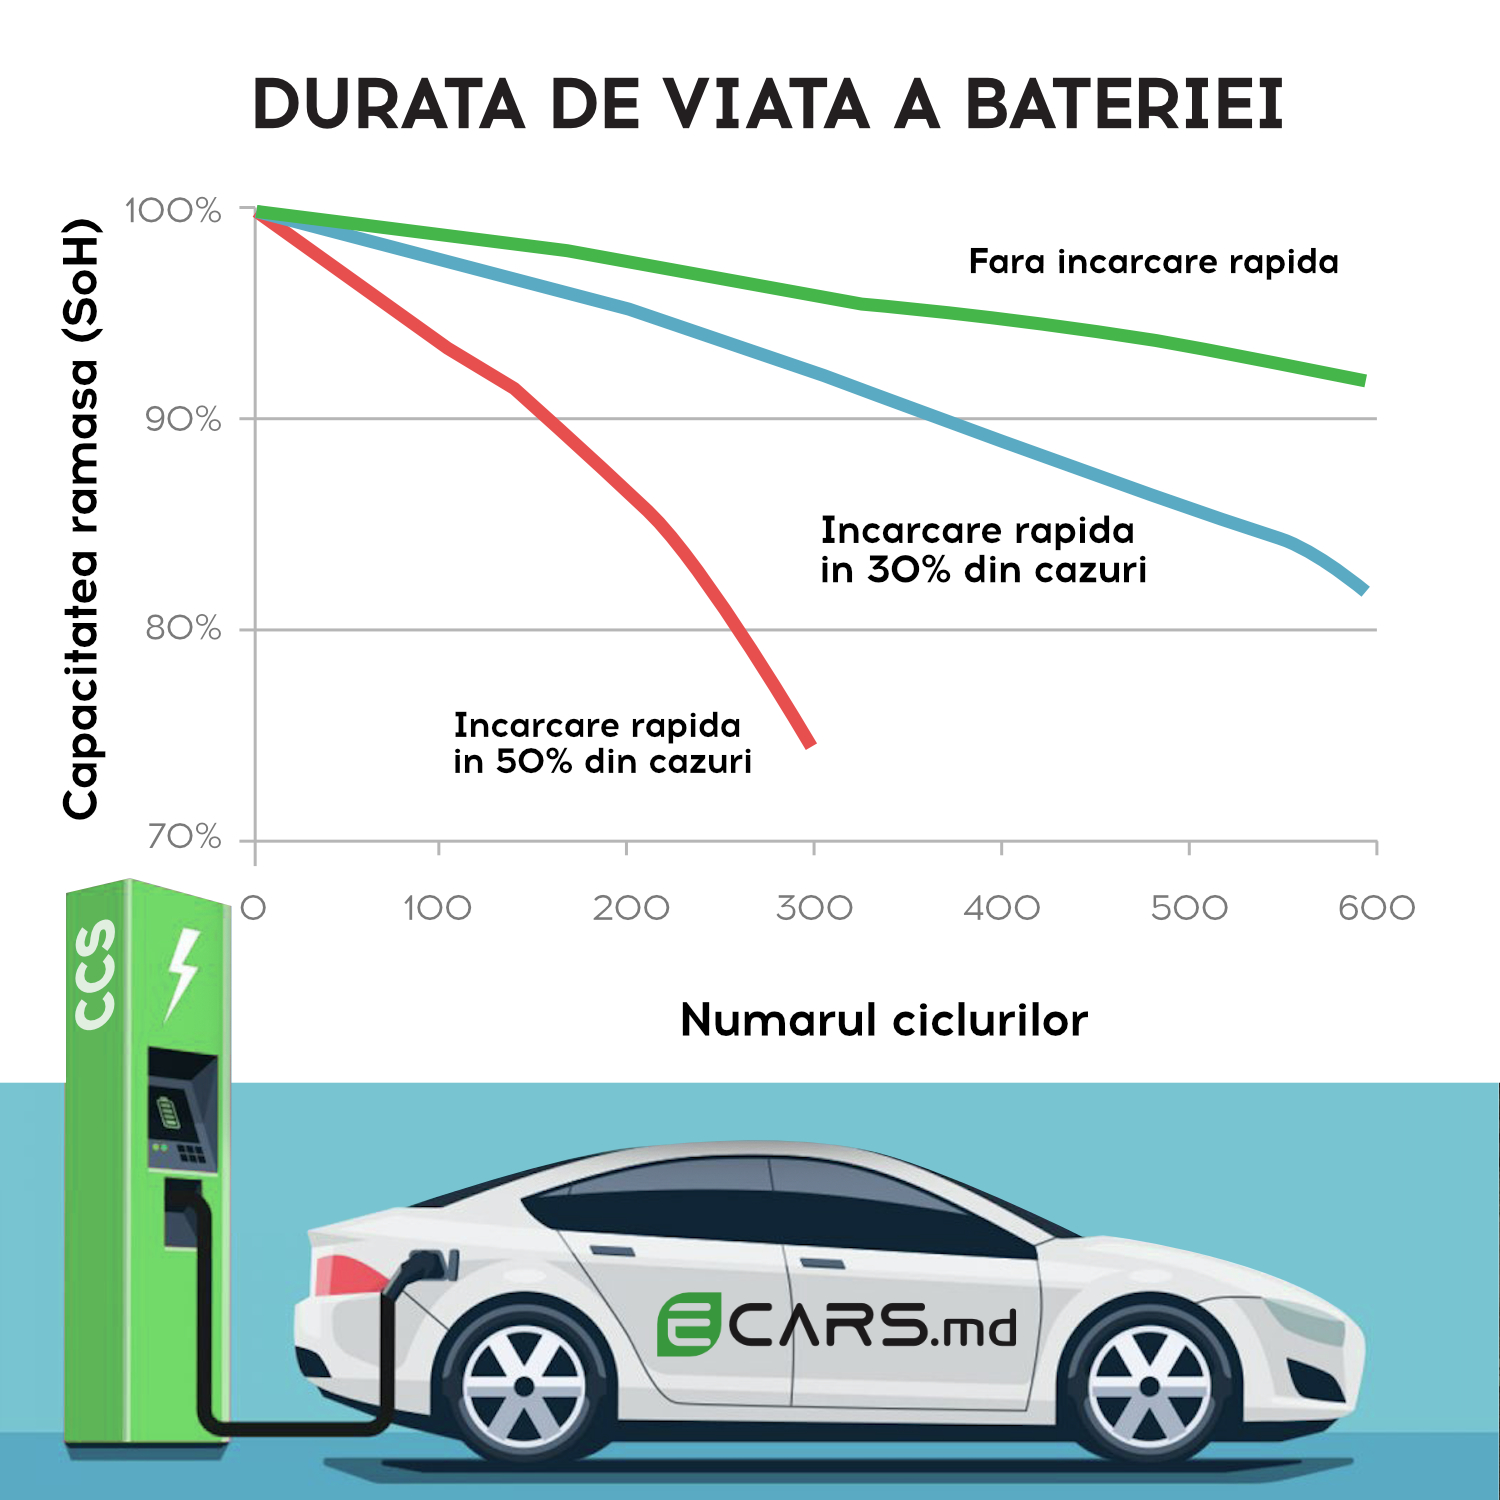 Срок службы электромобиля. График срока батареи у электрокаров. Средний период жизни батареи на электромобиле.